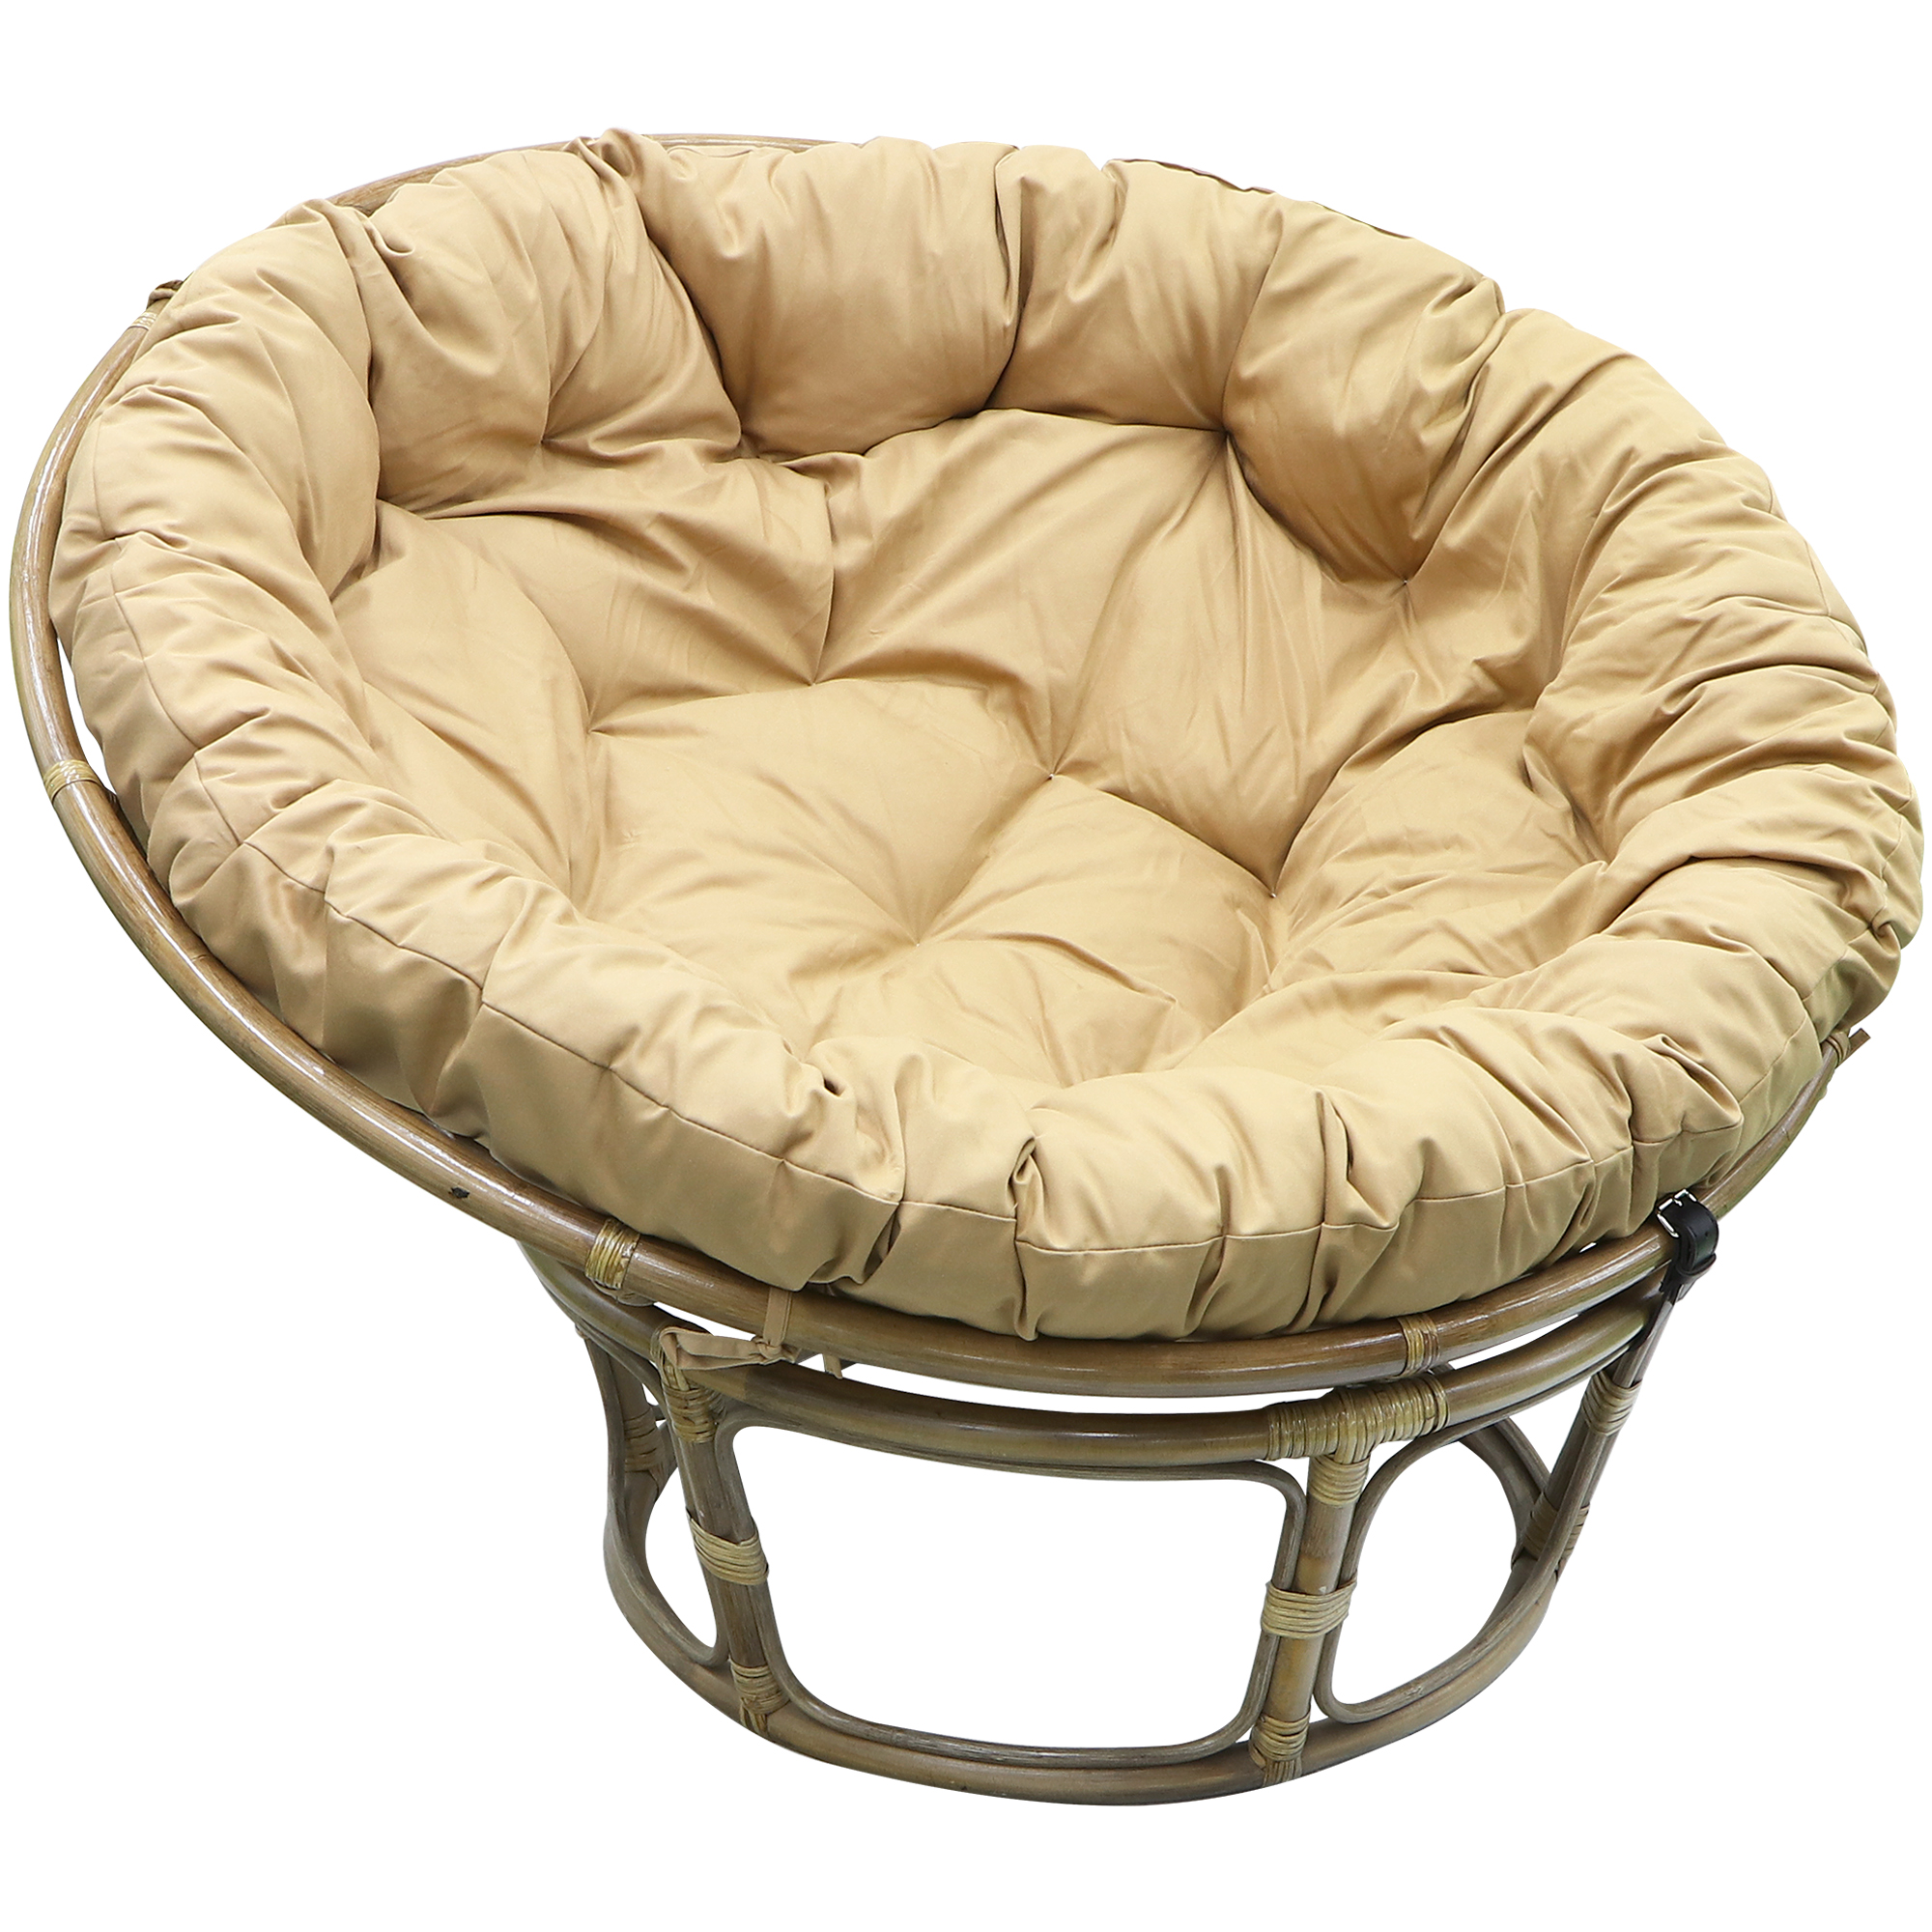 Кресло-папасан Rattan grand brown с подушкой бежевое плетеное кресло папасан эко натуральный ротанг бежевый рогожка